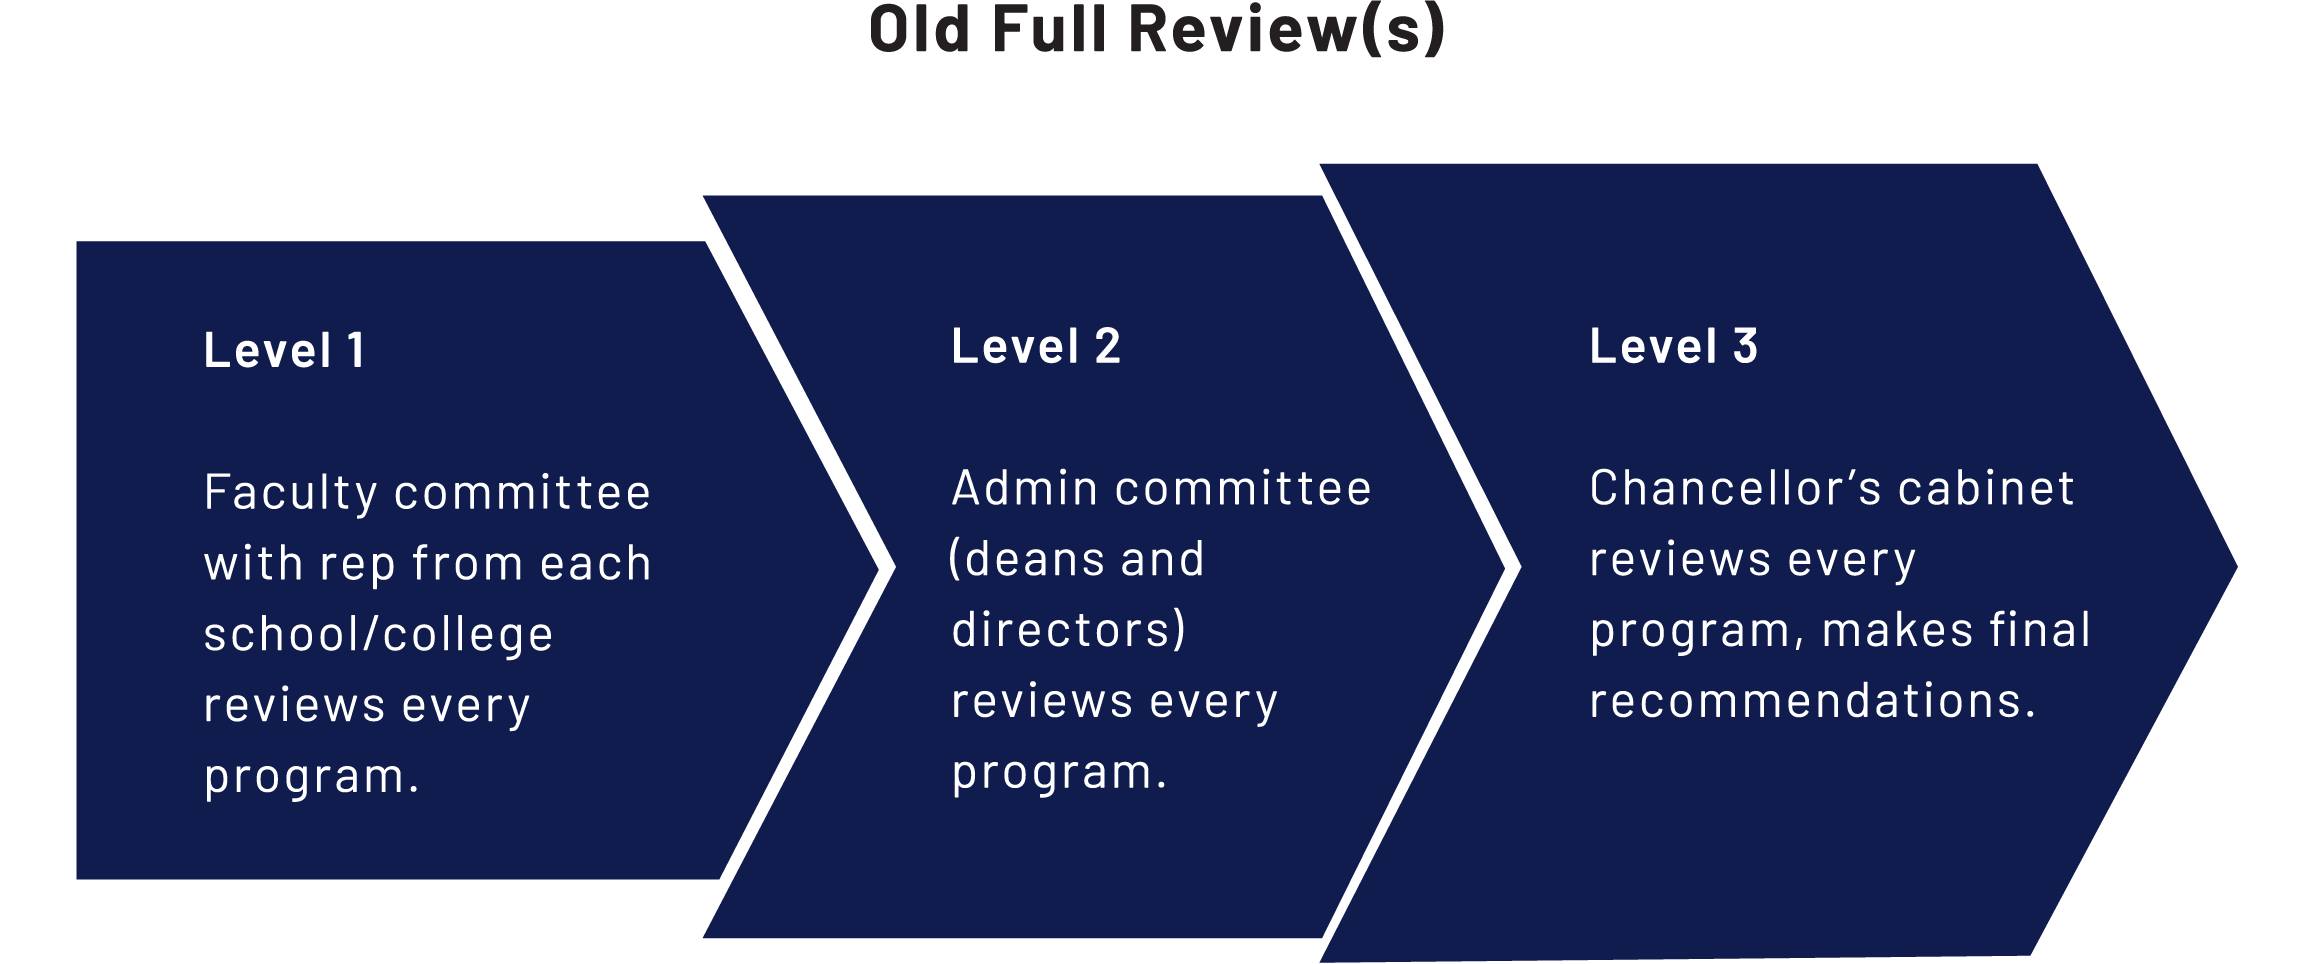 Previous Program Review Process